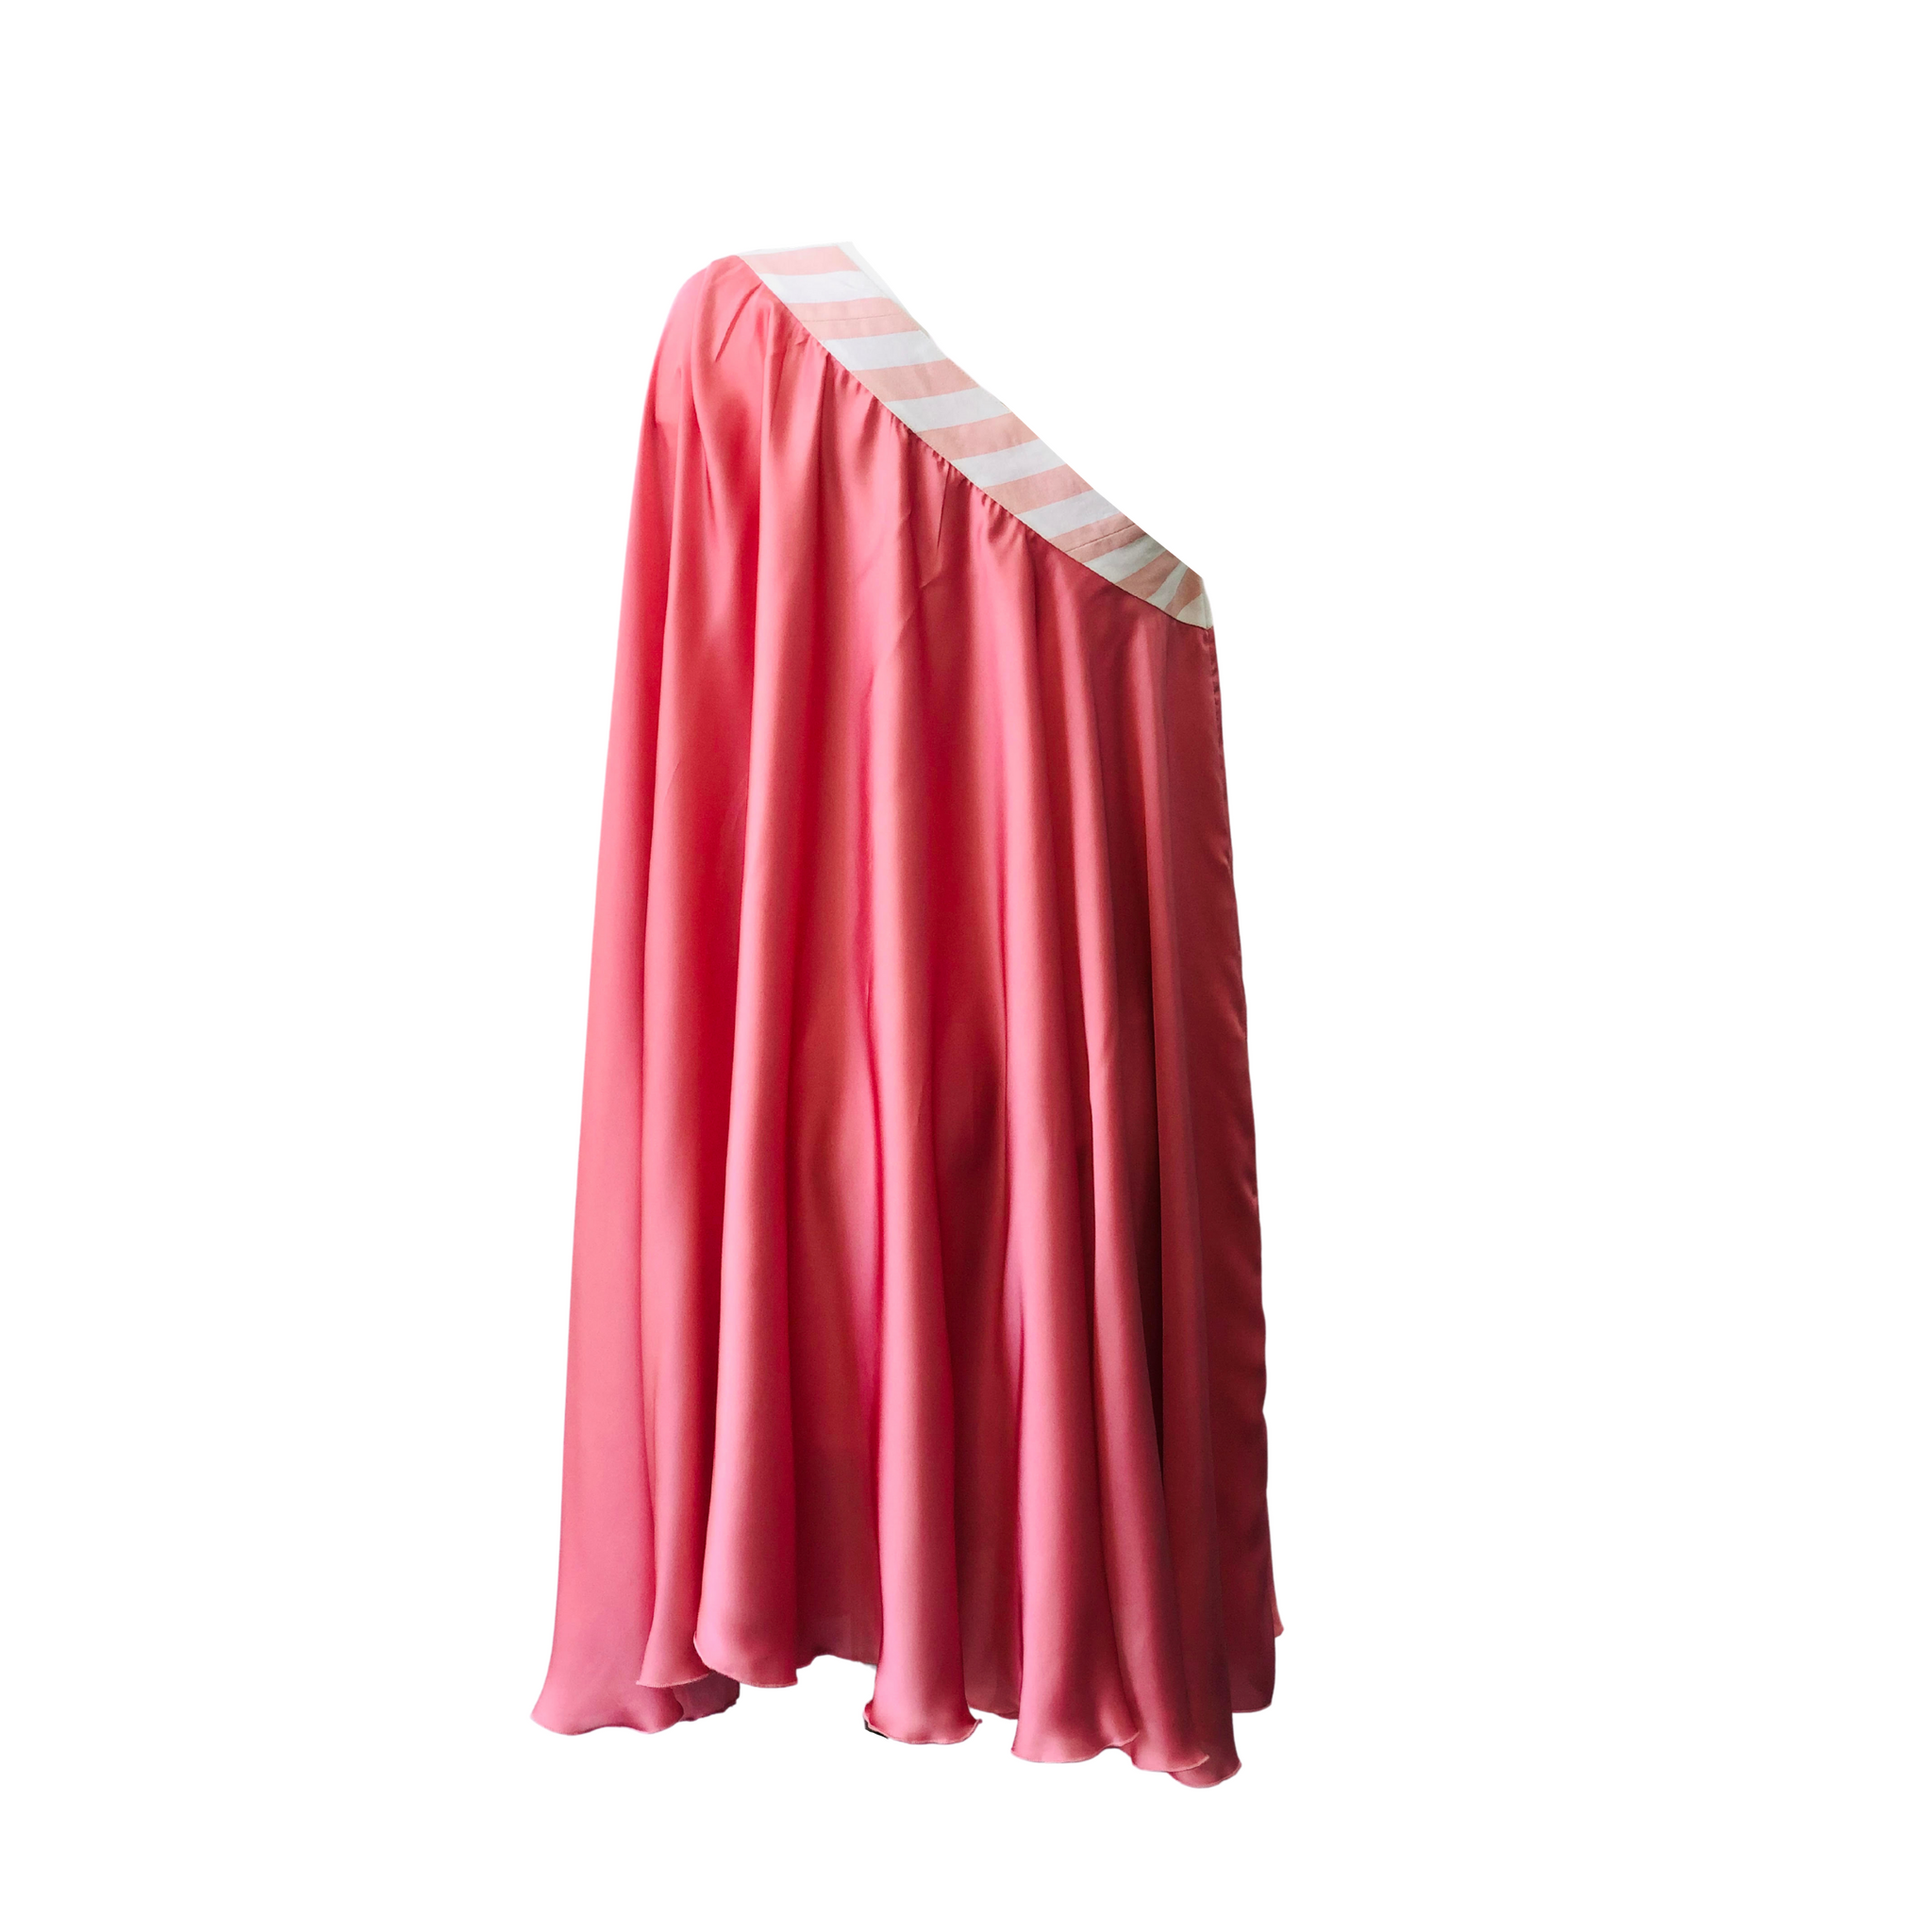 Pink volume dress